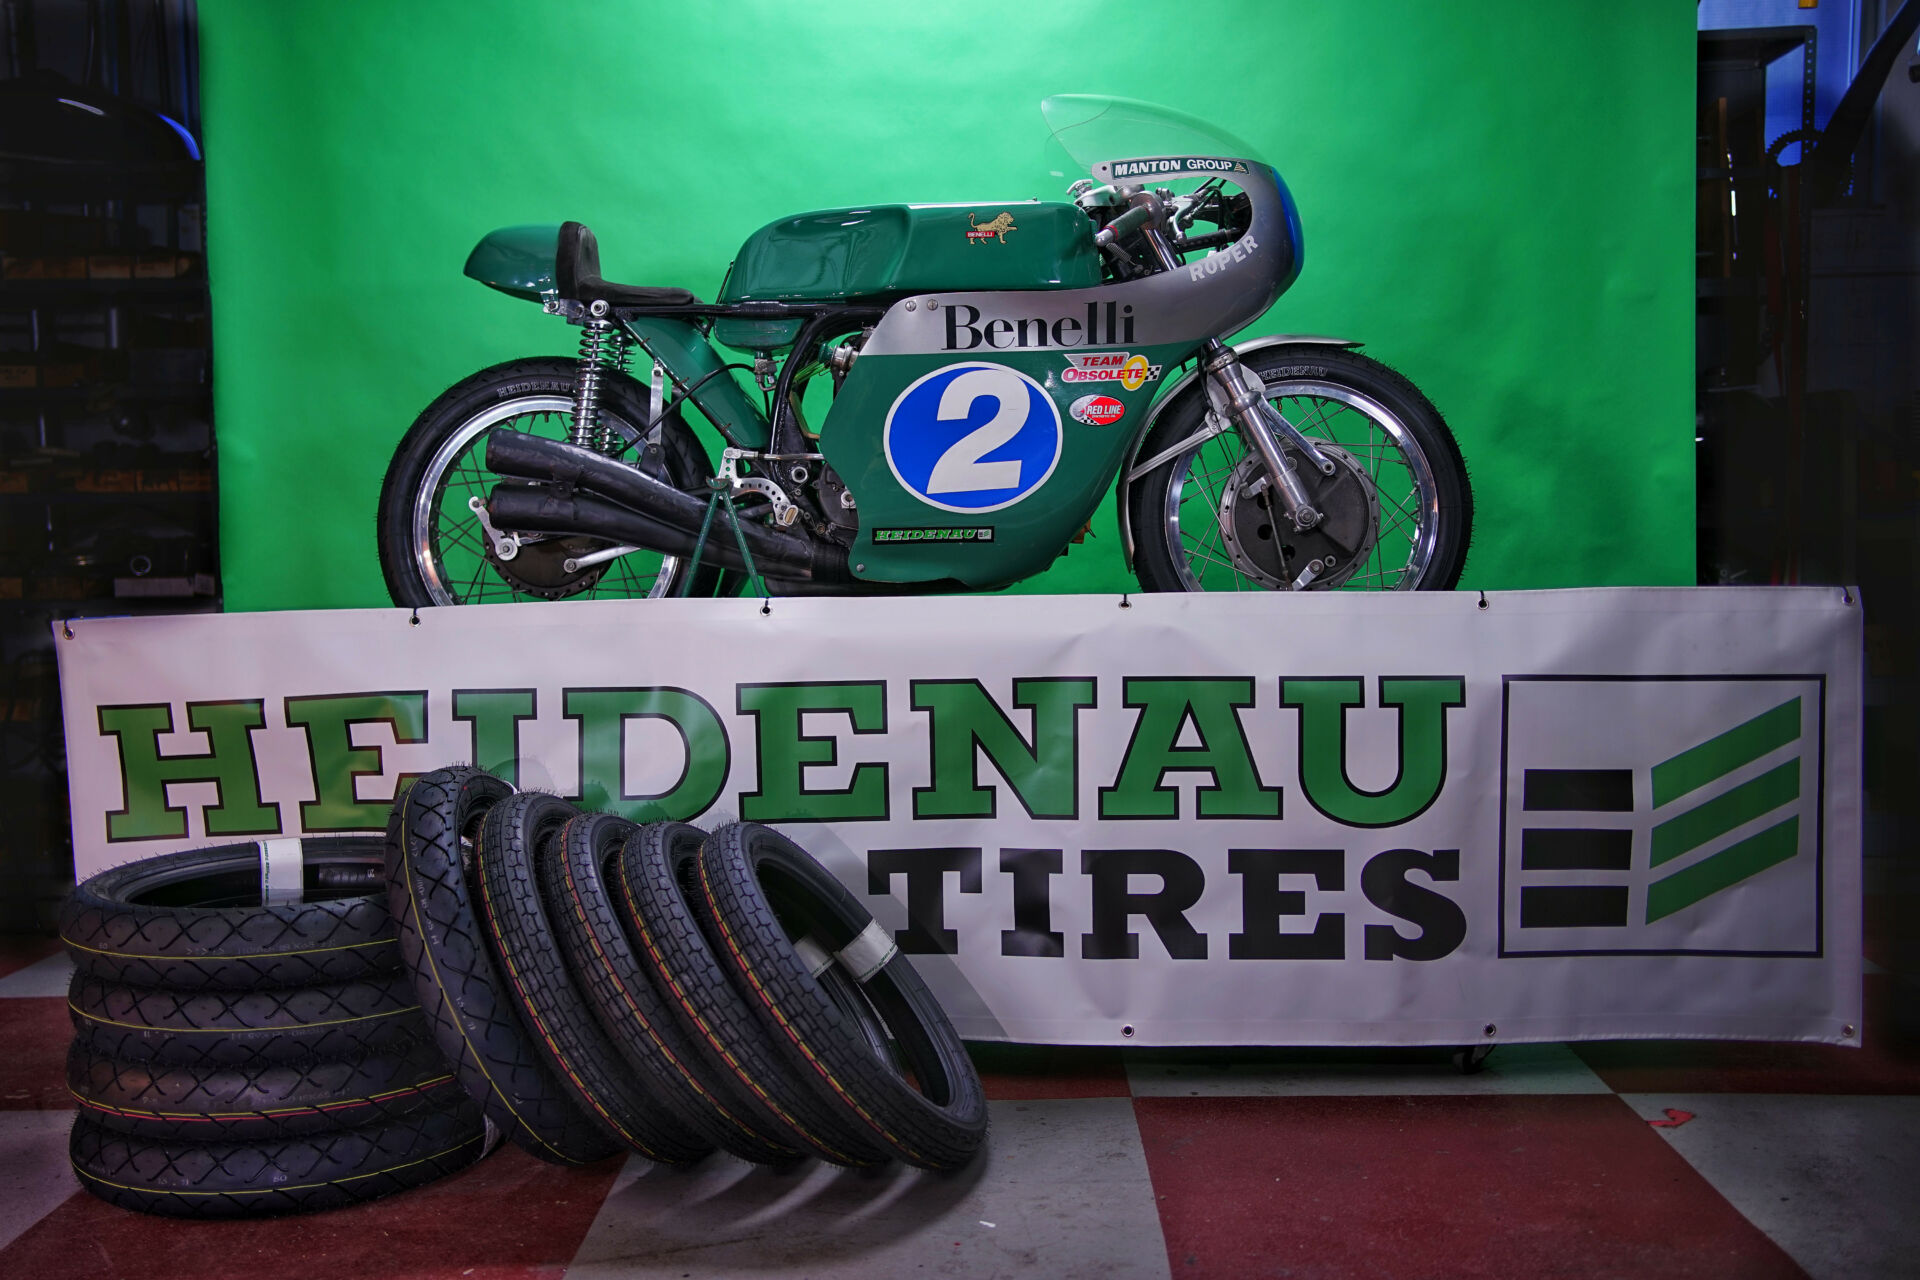 Team Obsolete is now sponsored by Heidenau Tires. Photo courtesy Team Obsolete.